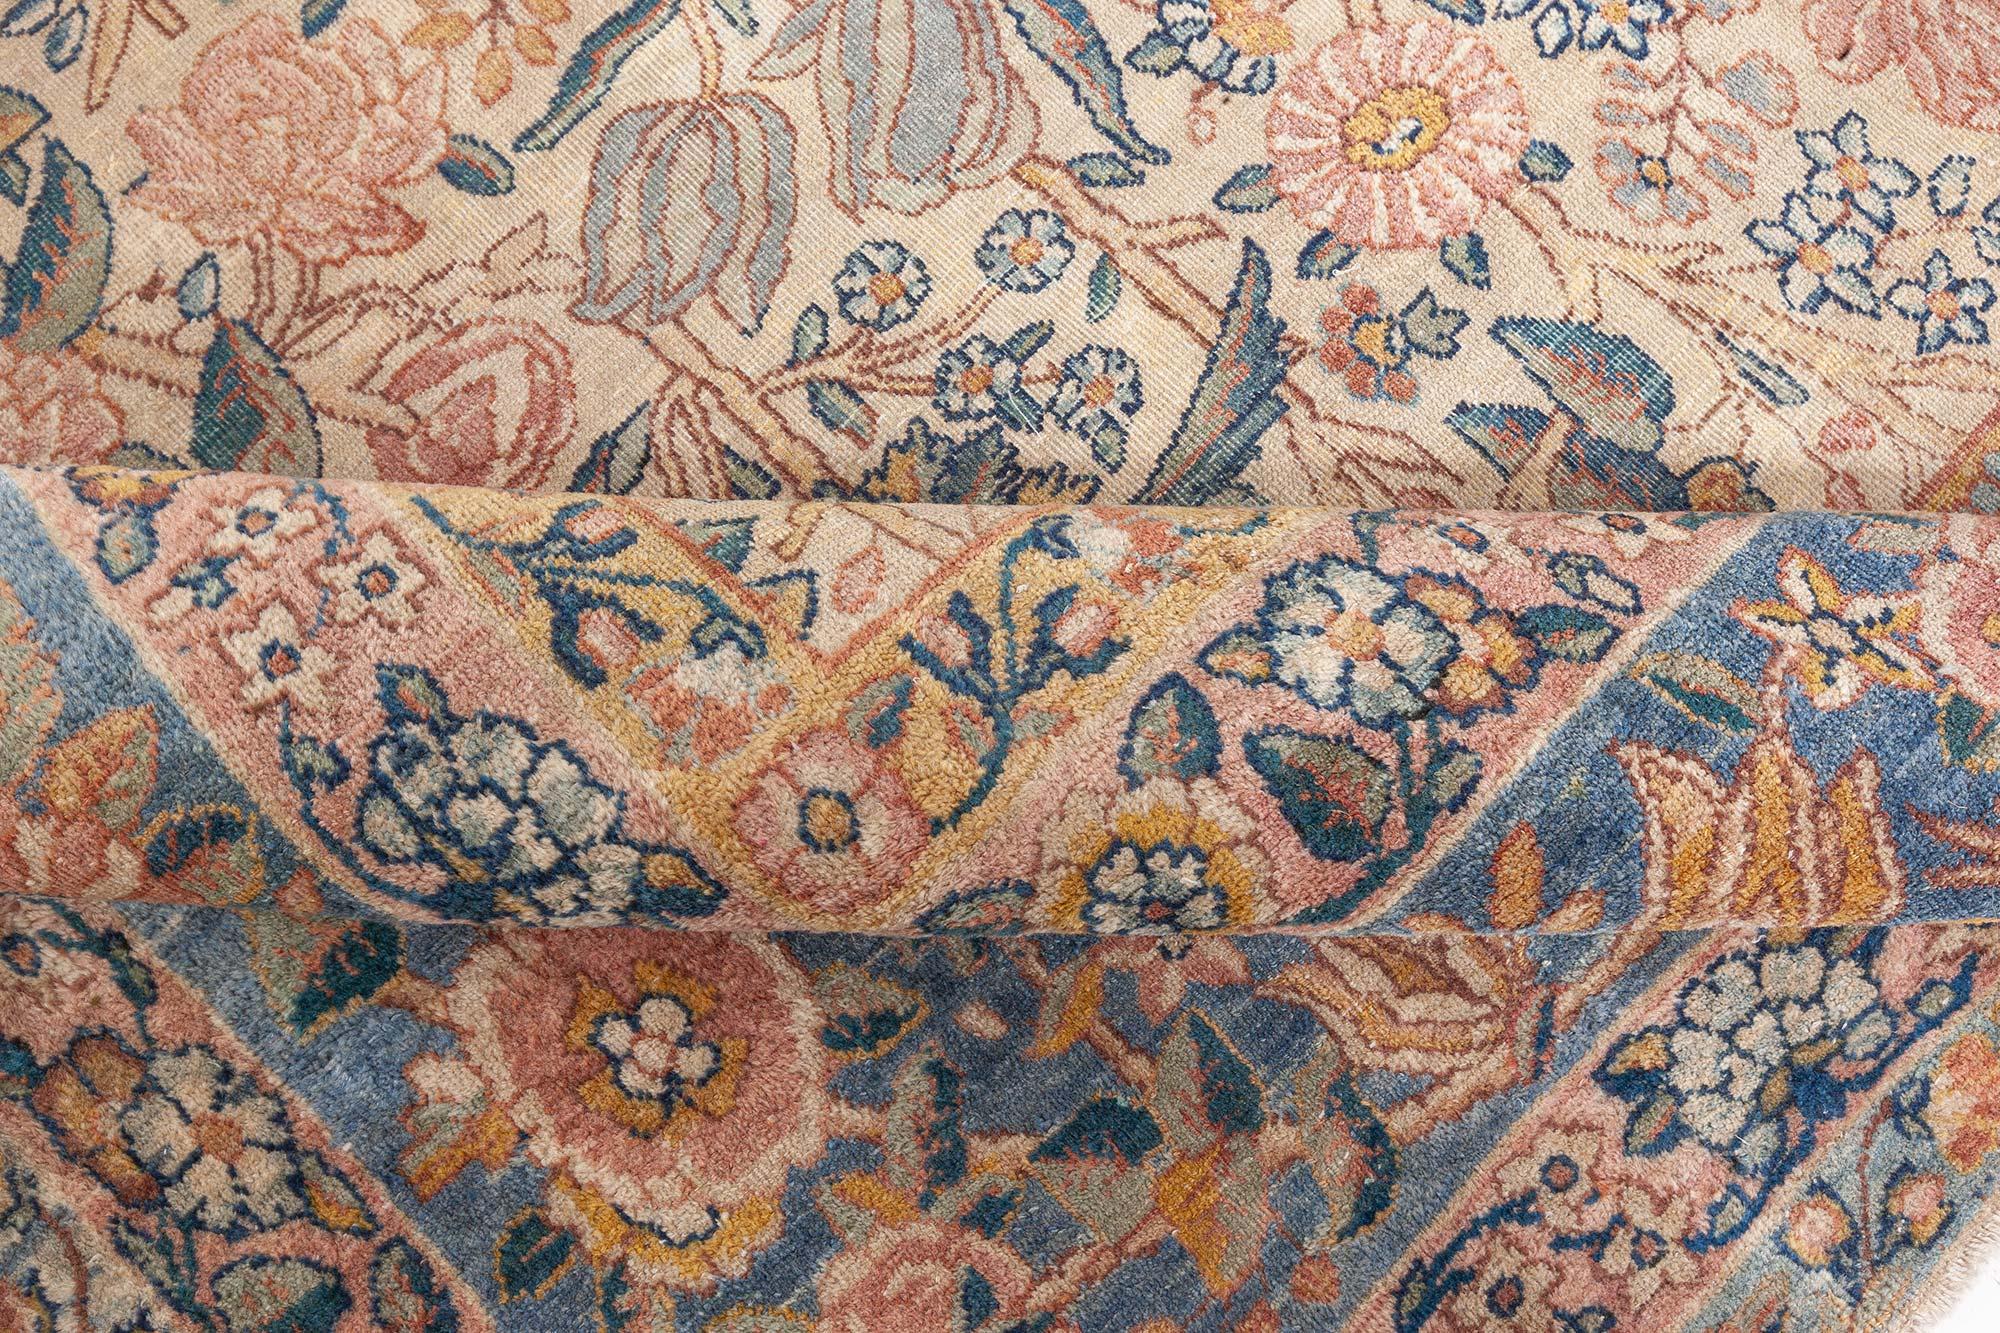 19th century Persian Kirman floral handwoven wool rug
Size: 11'2